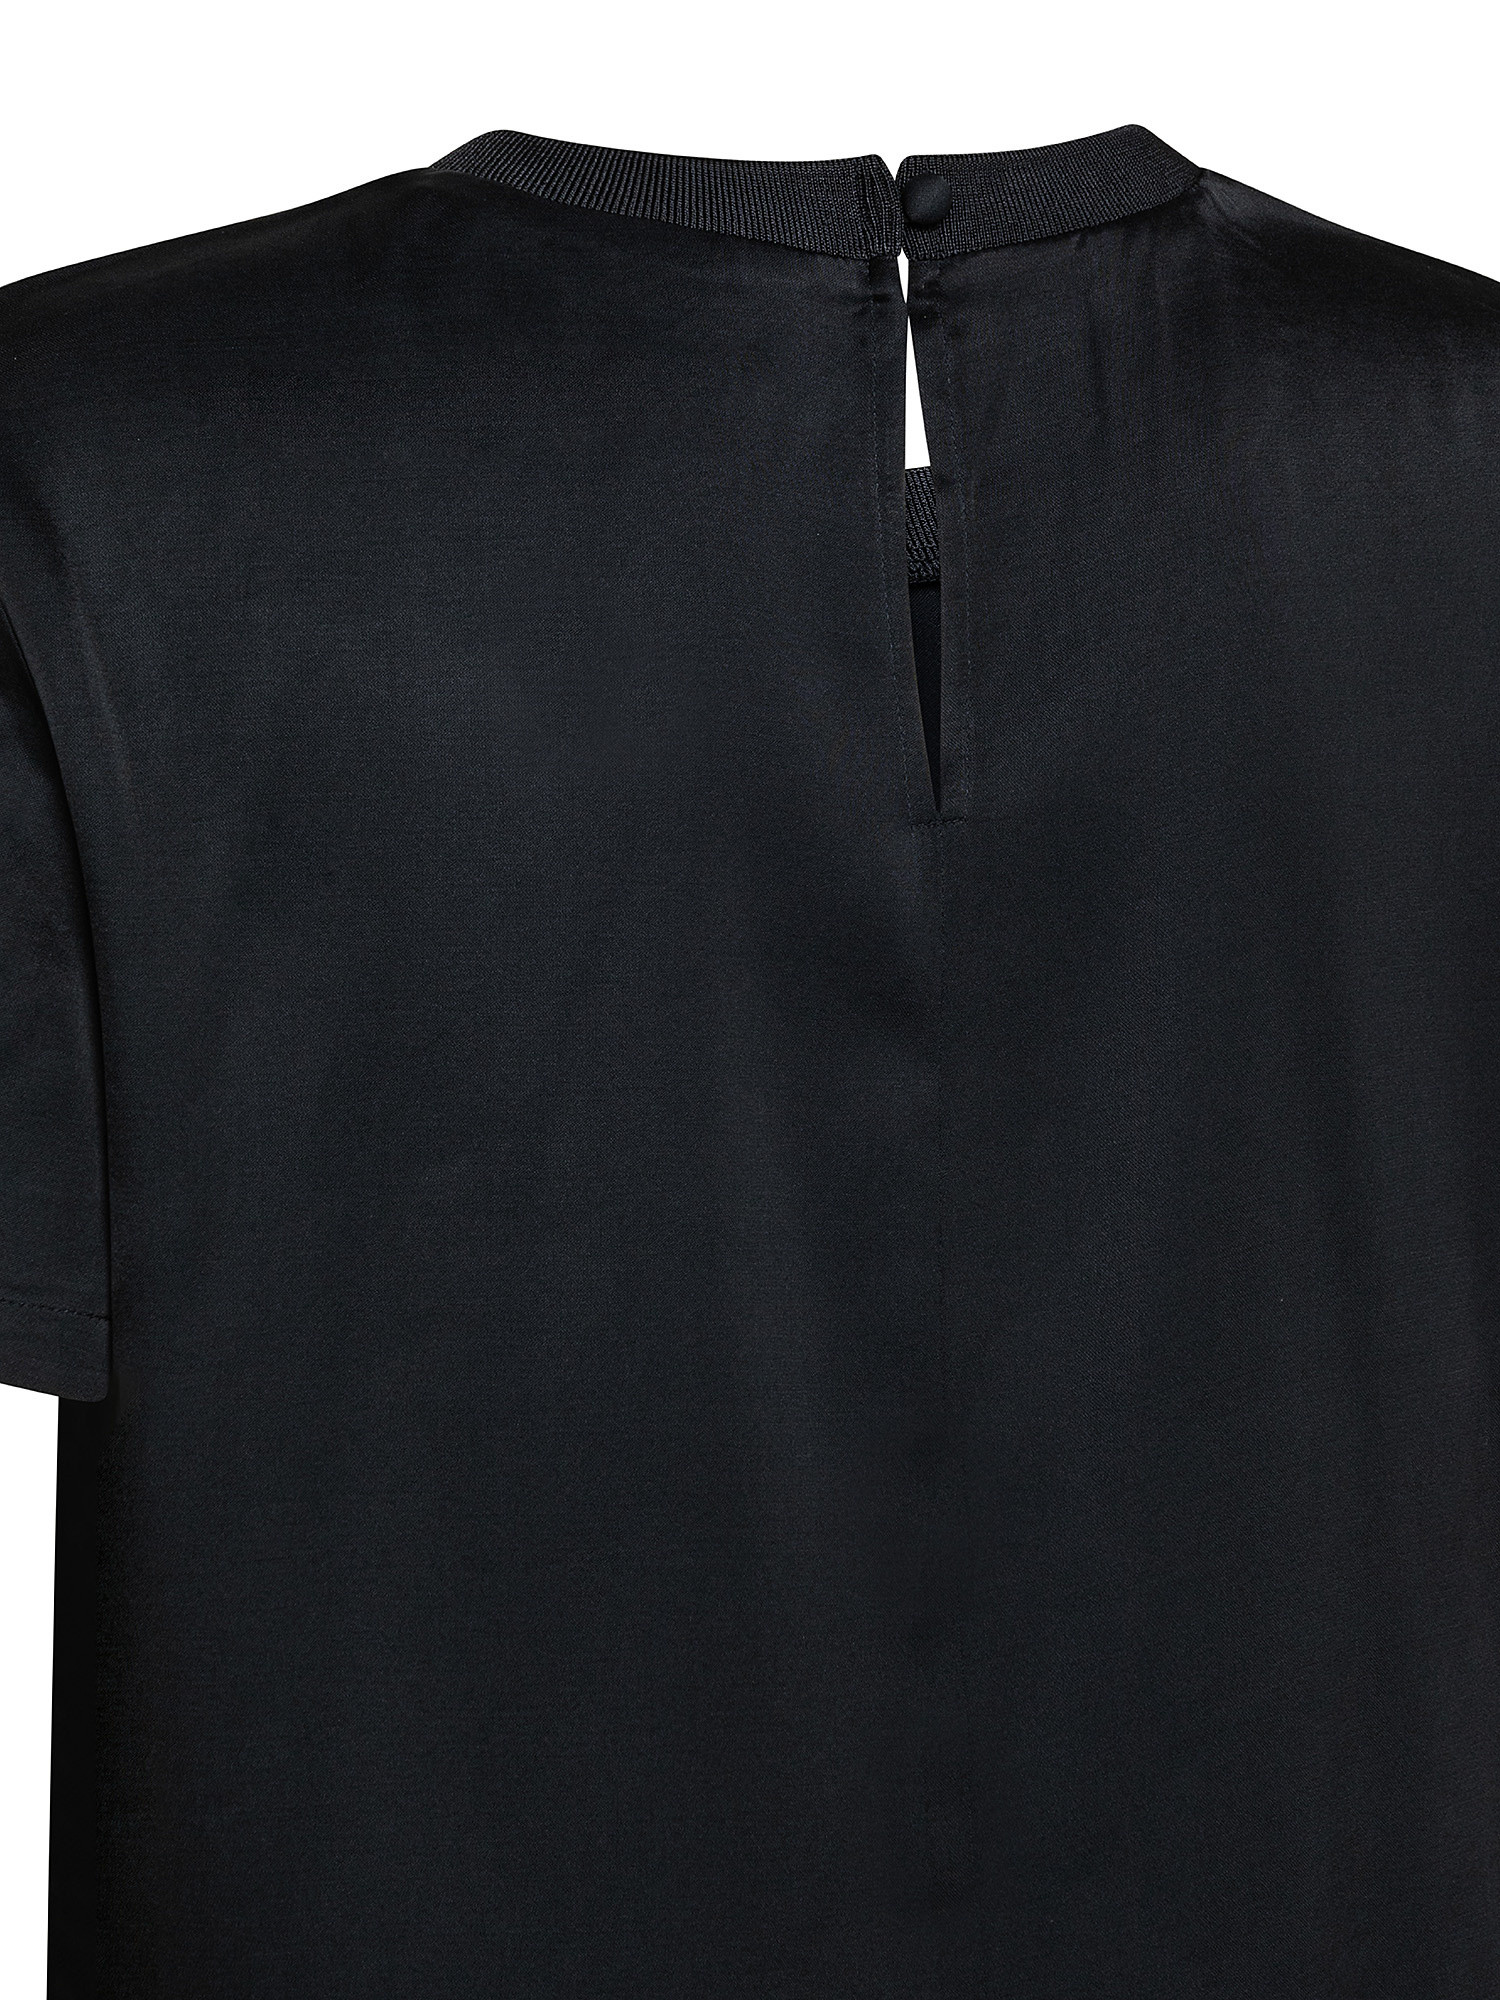 Satin blouse, Black, large image number 2